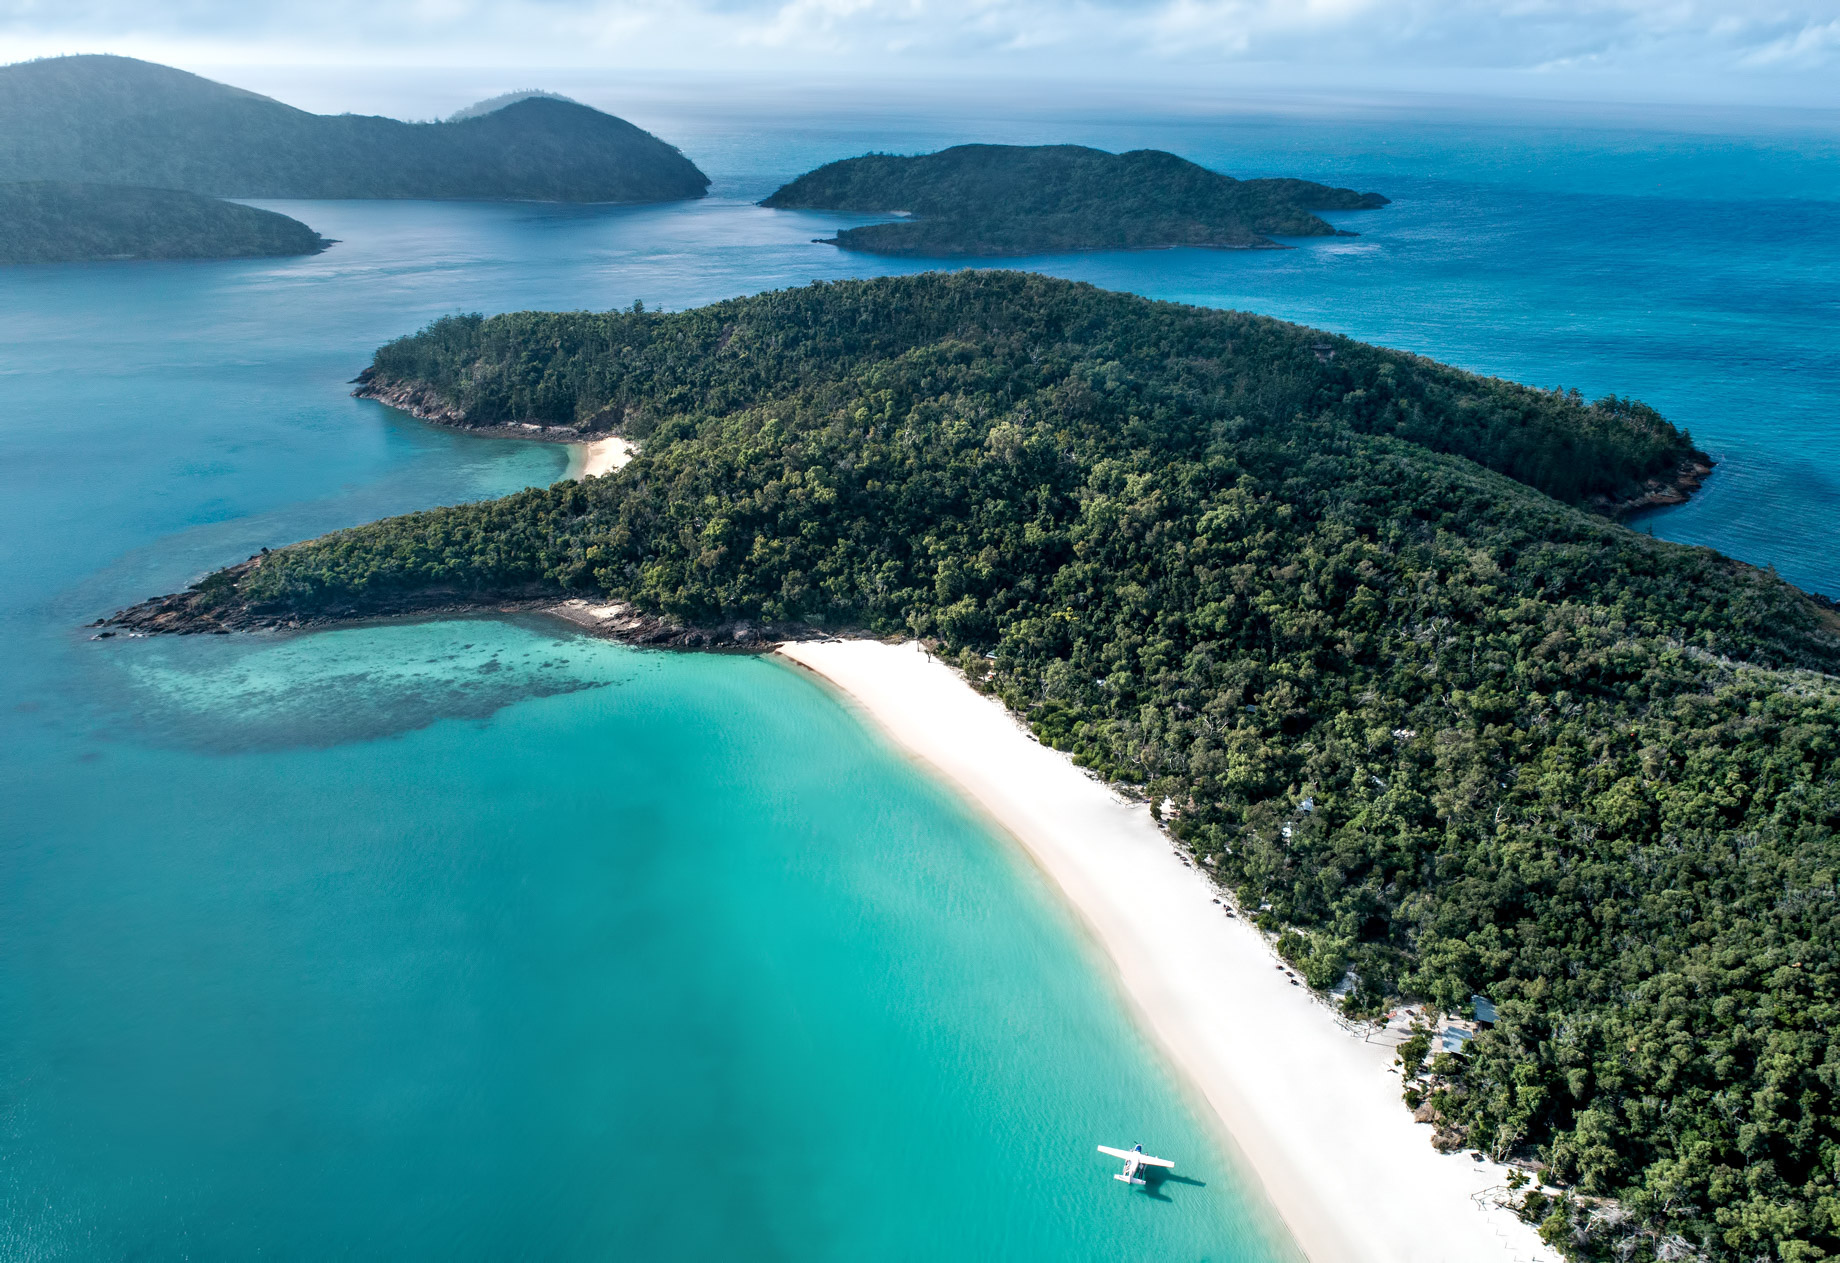 InterContinental Hayman Island Resort – Whitsunday Islands, Australia – Whitehaven Beach Float Plane Tour